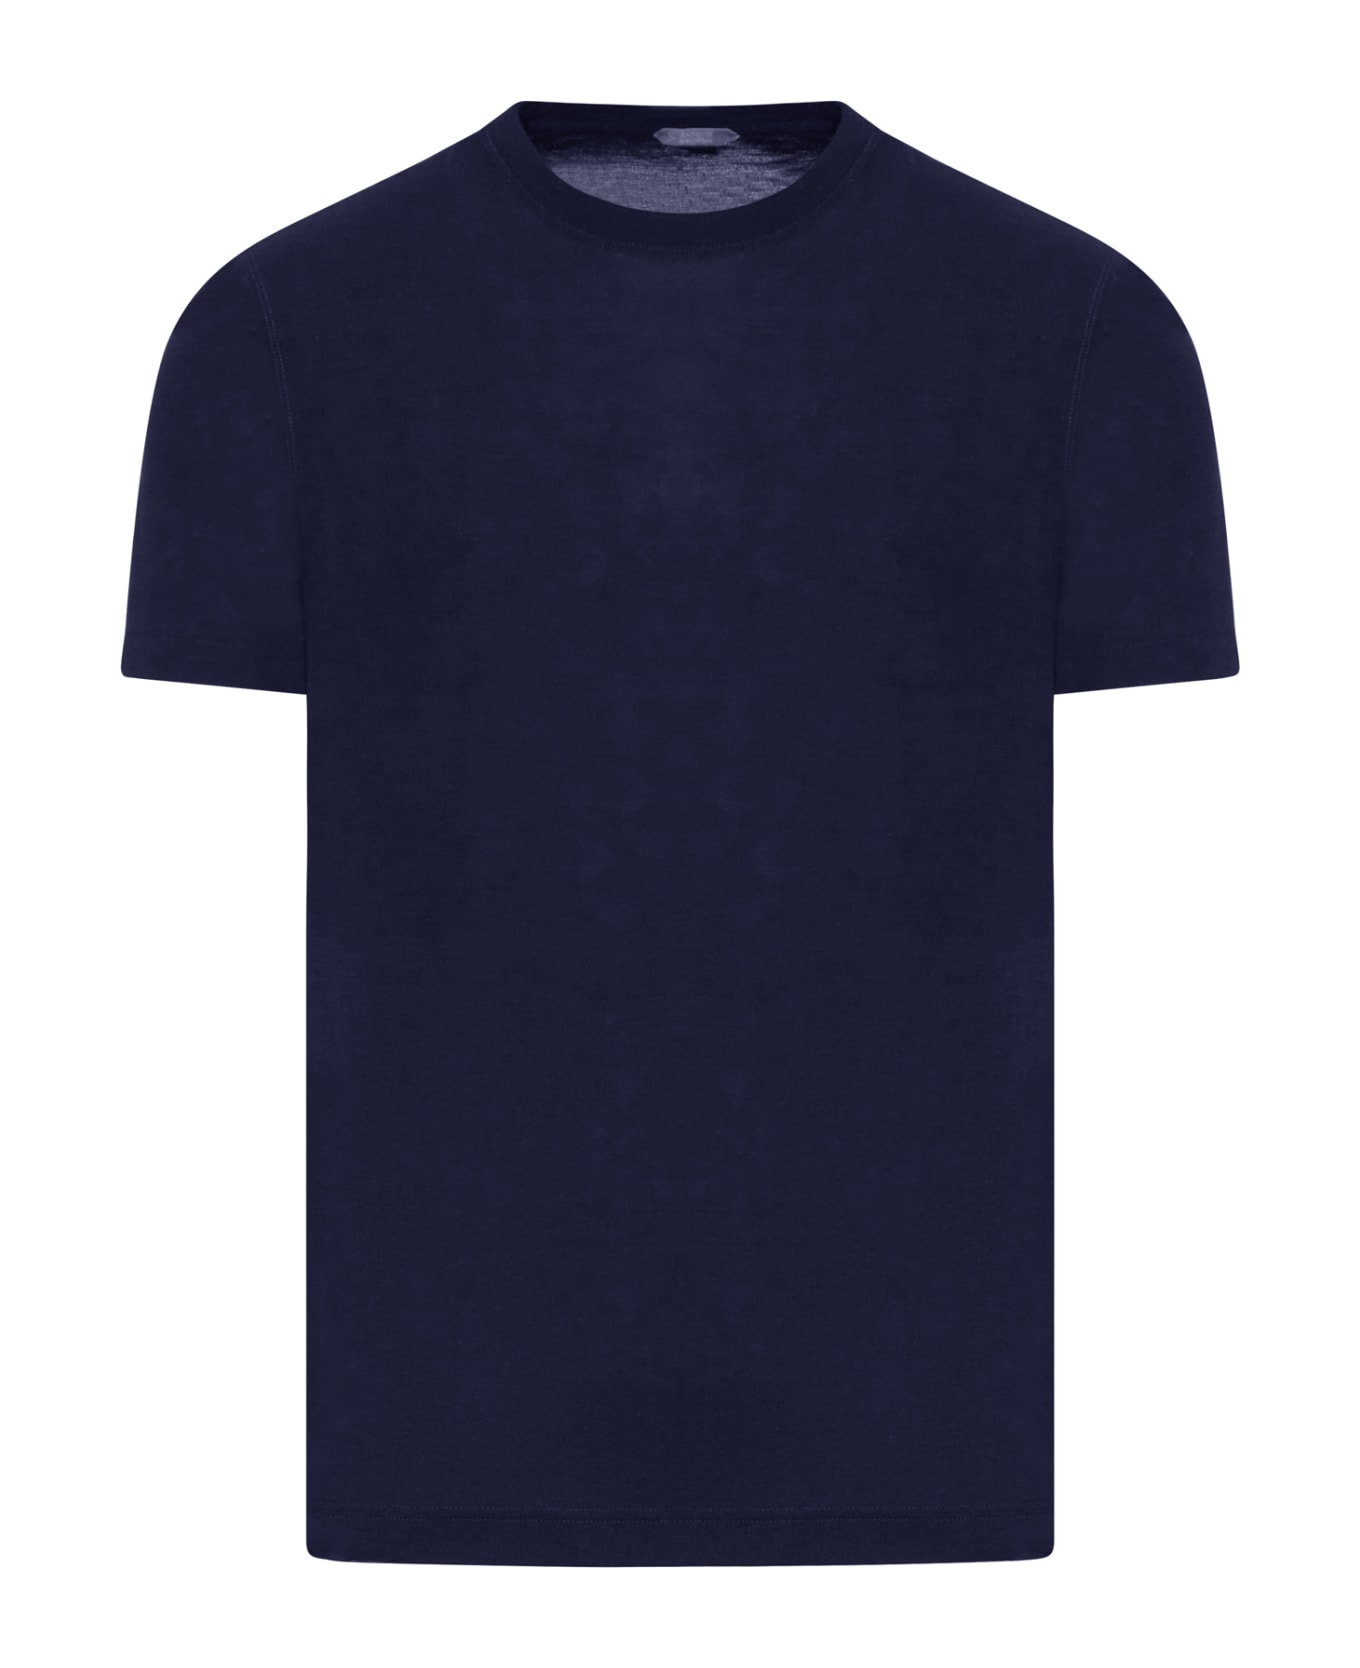 Zanone Tshirt Ss - Blue Navy